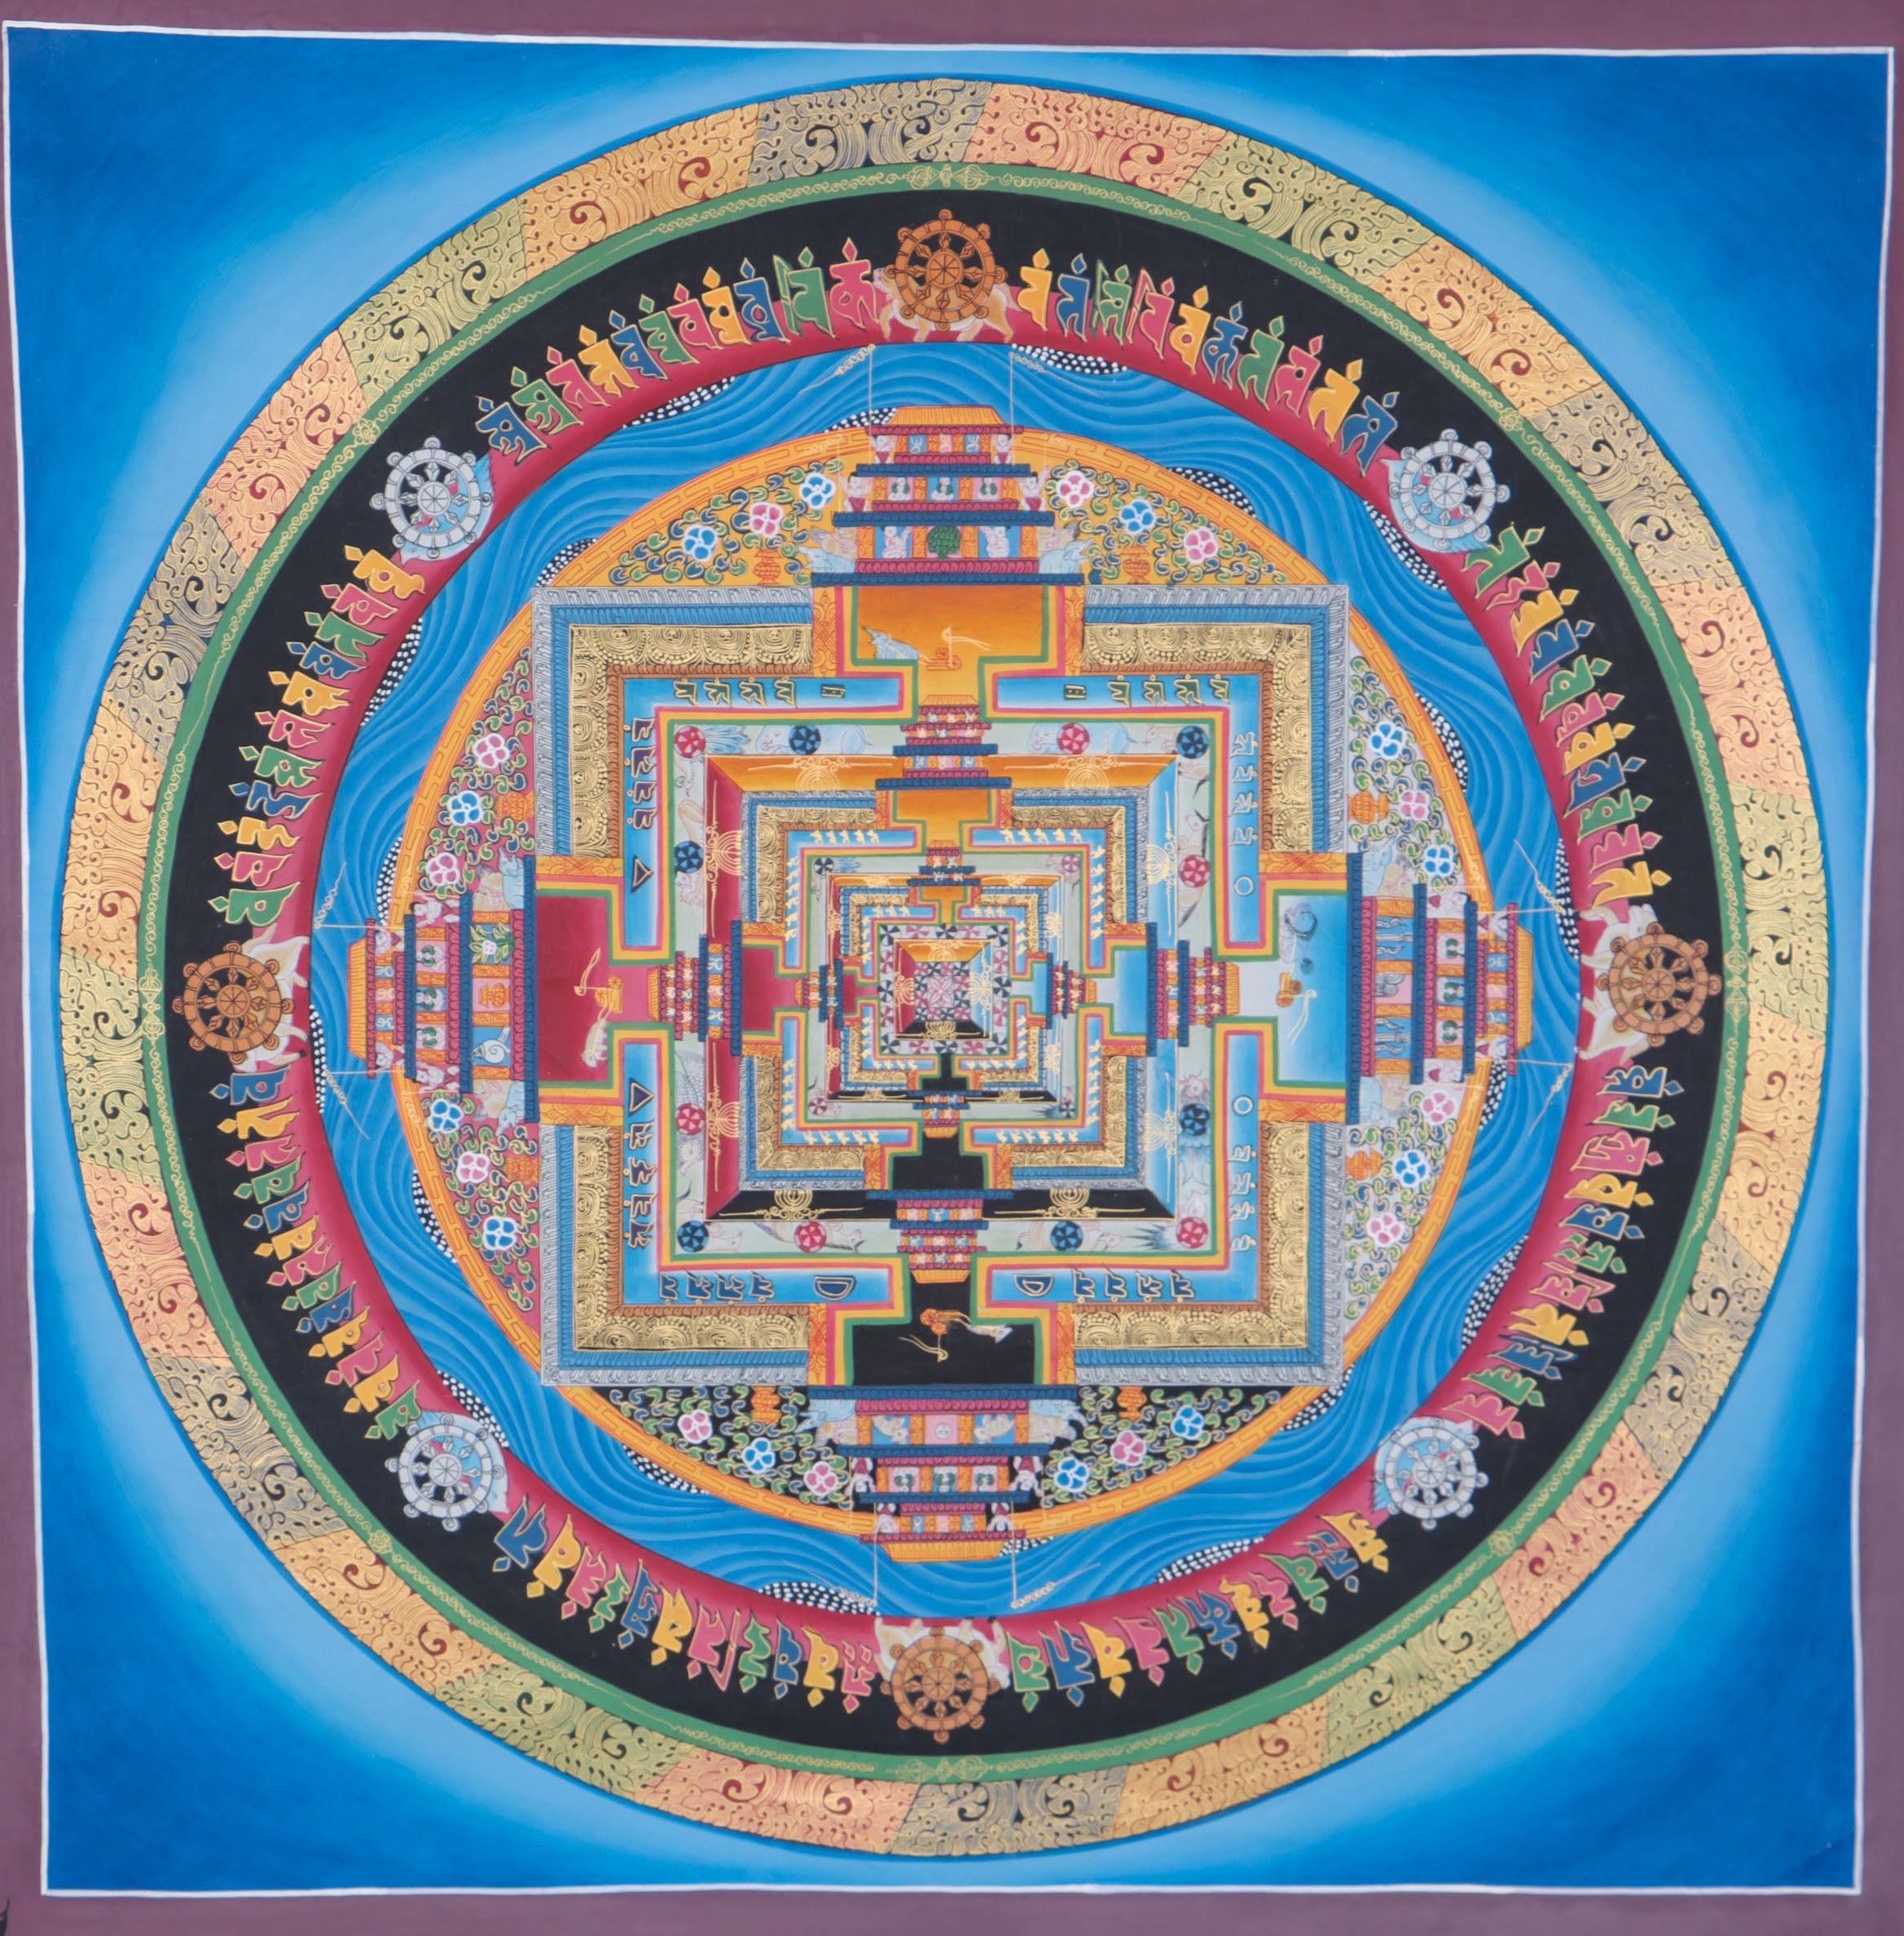 Blue Kalachakra Mandala for  meditation and enlightenment.